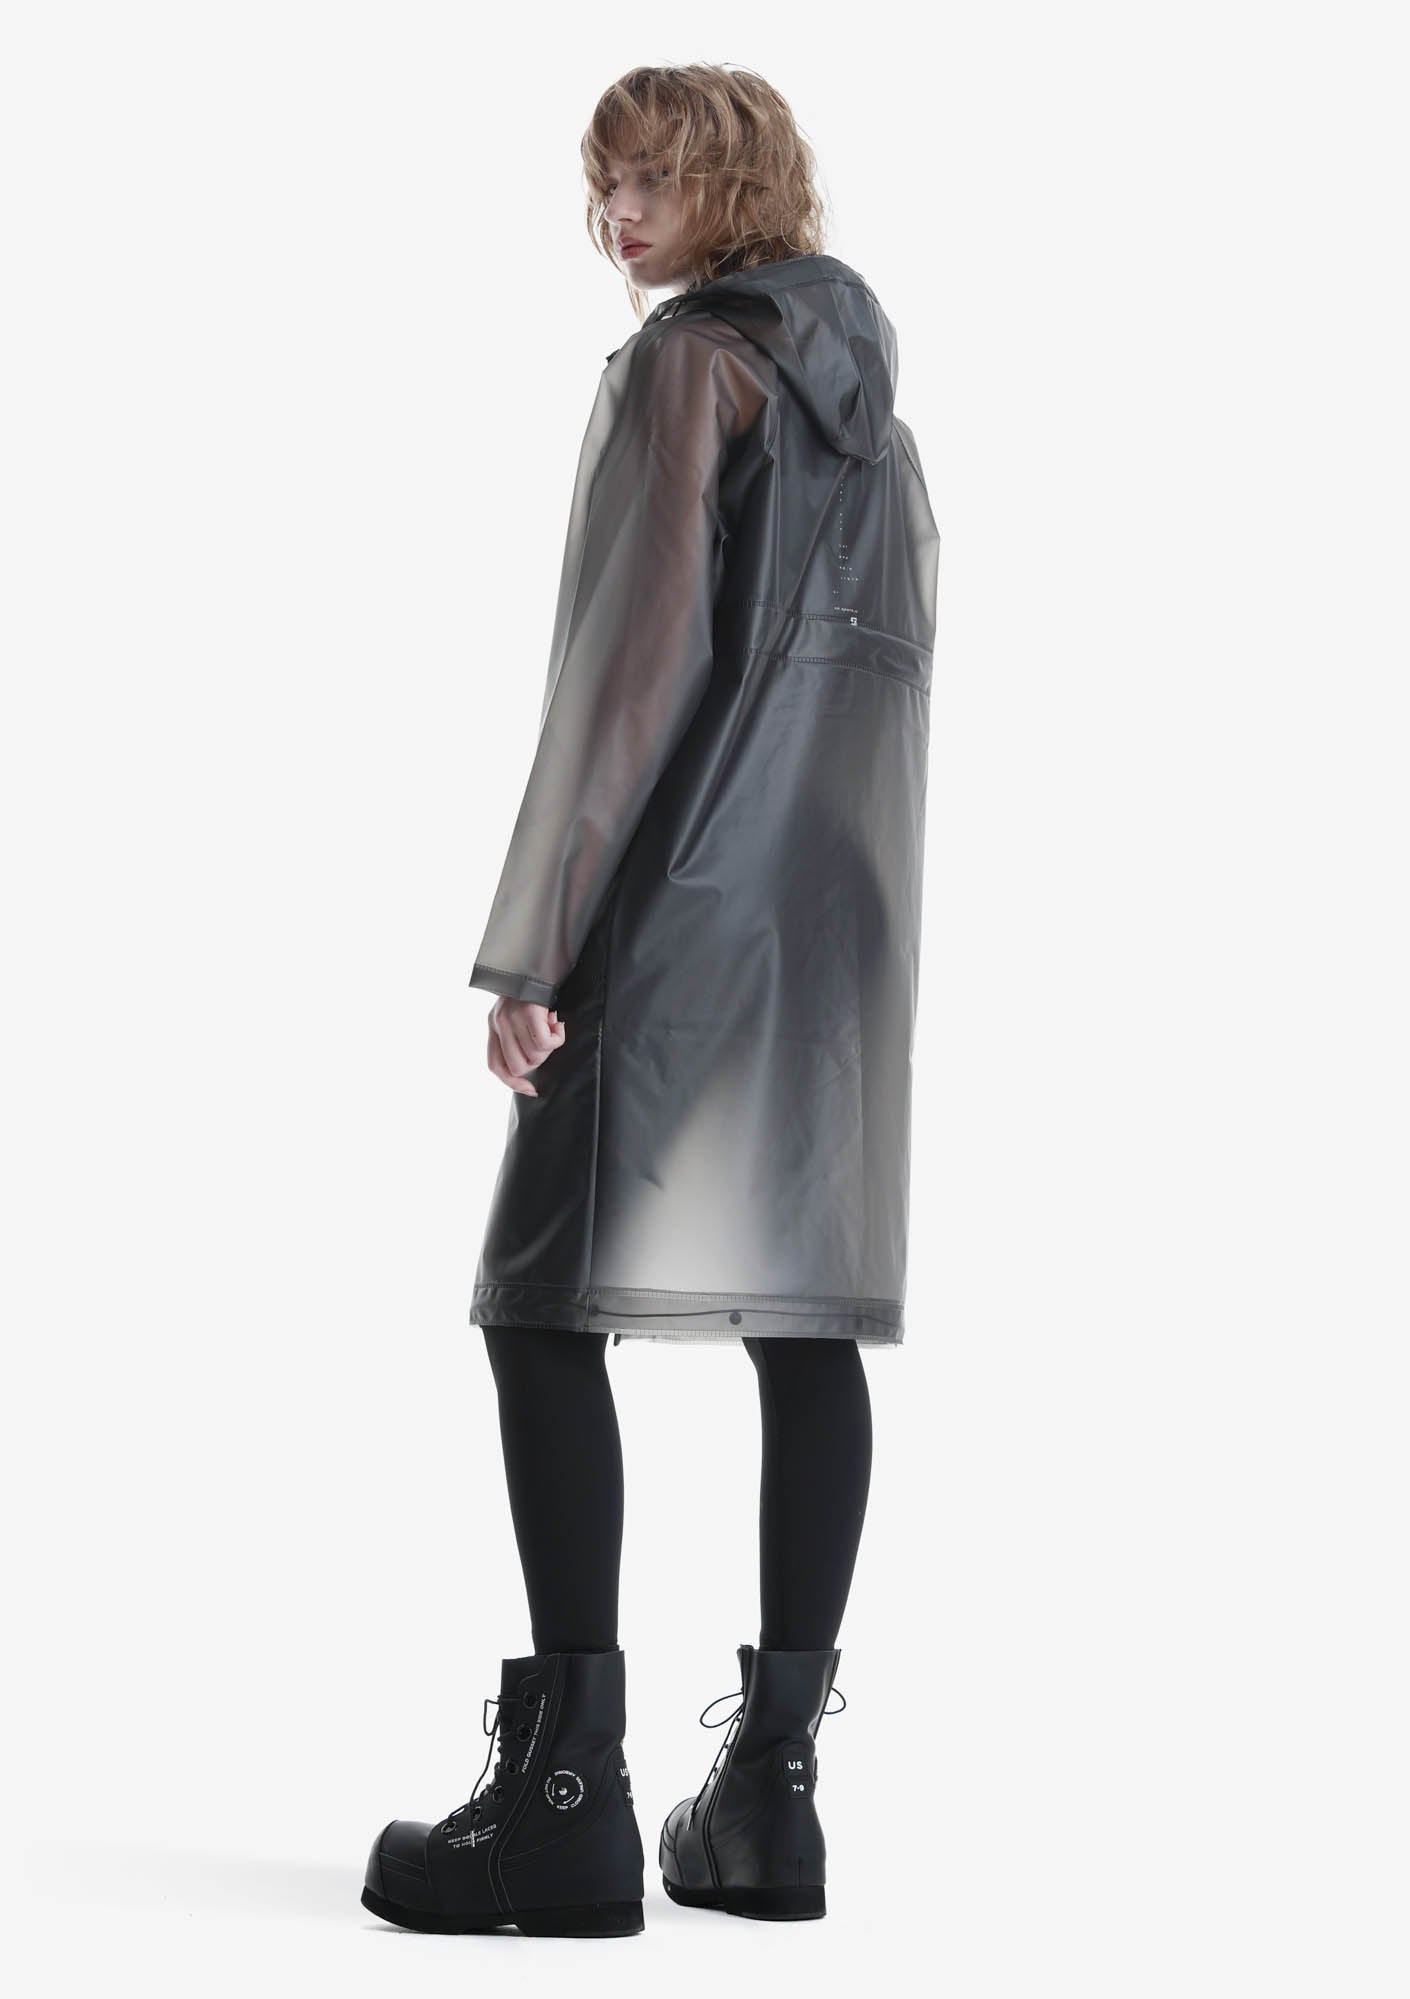 TETHYS Welded Transformable Raincoat Qu466-2